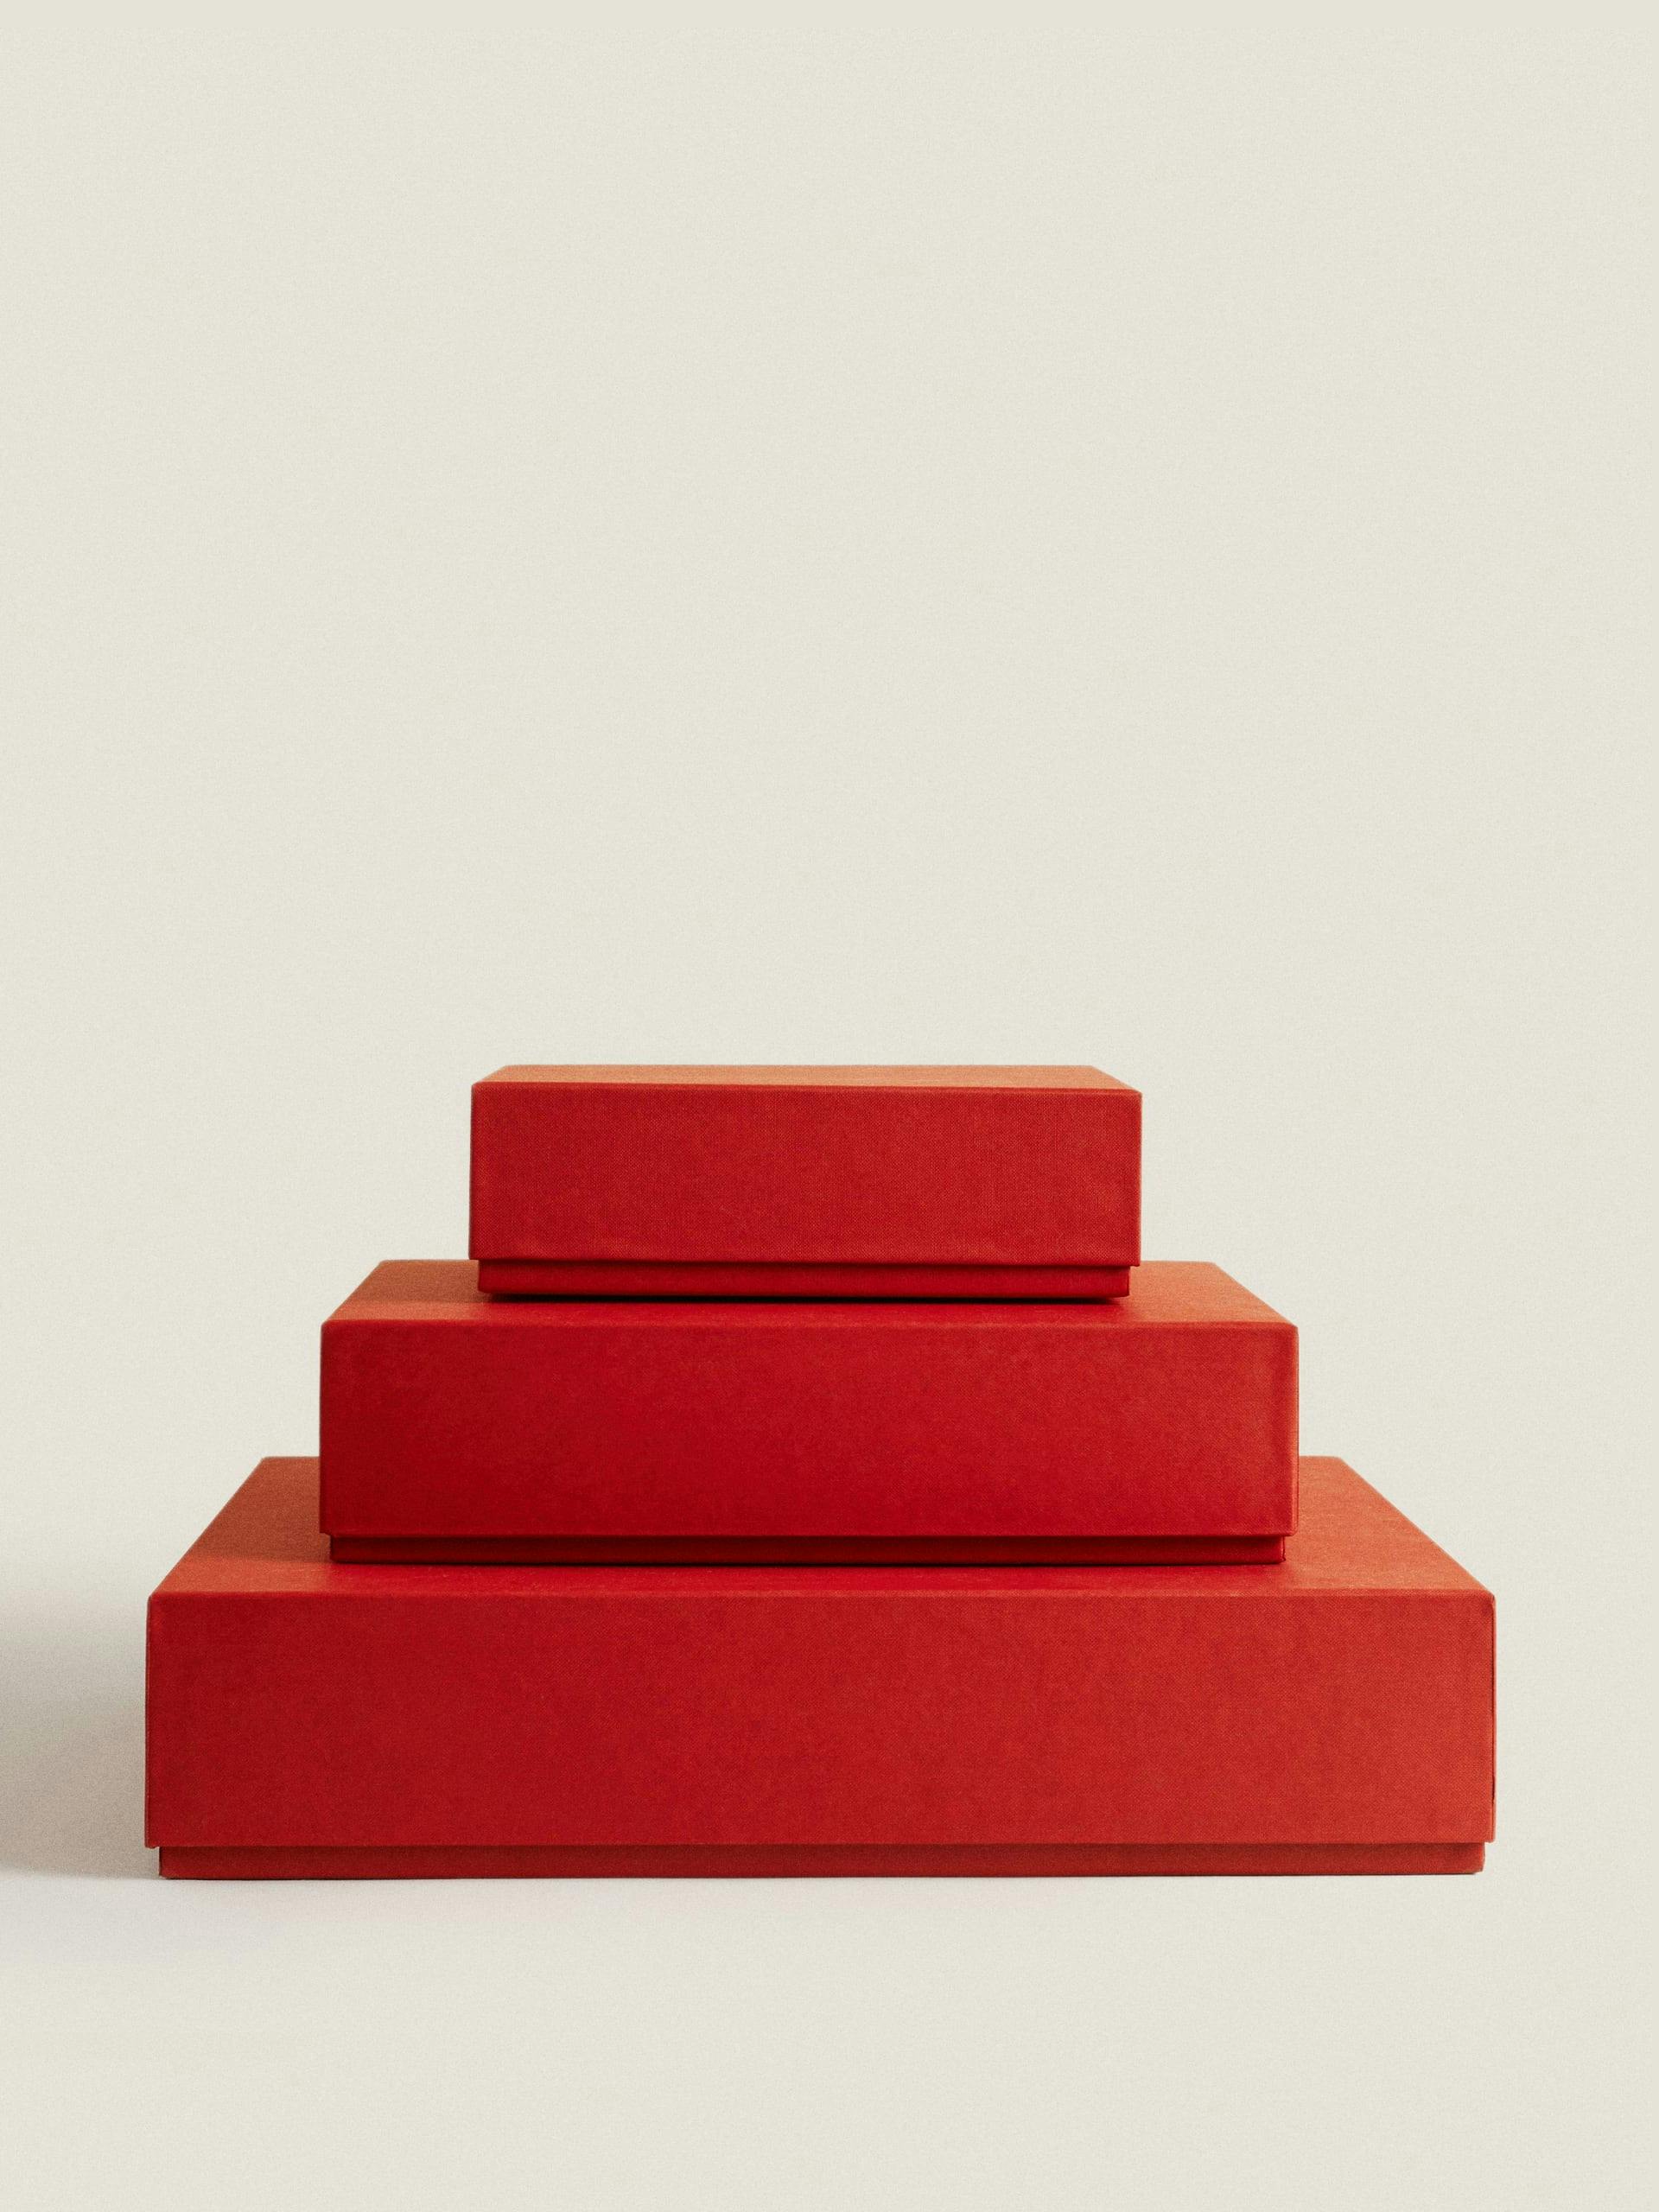 Small red cardboard filing box